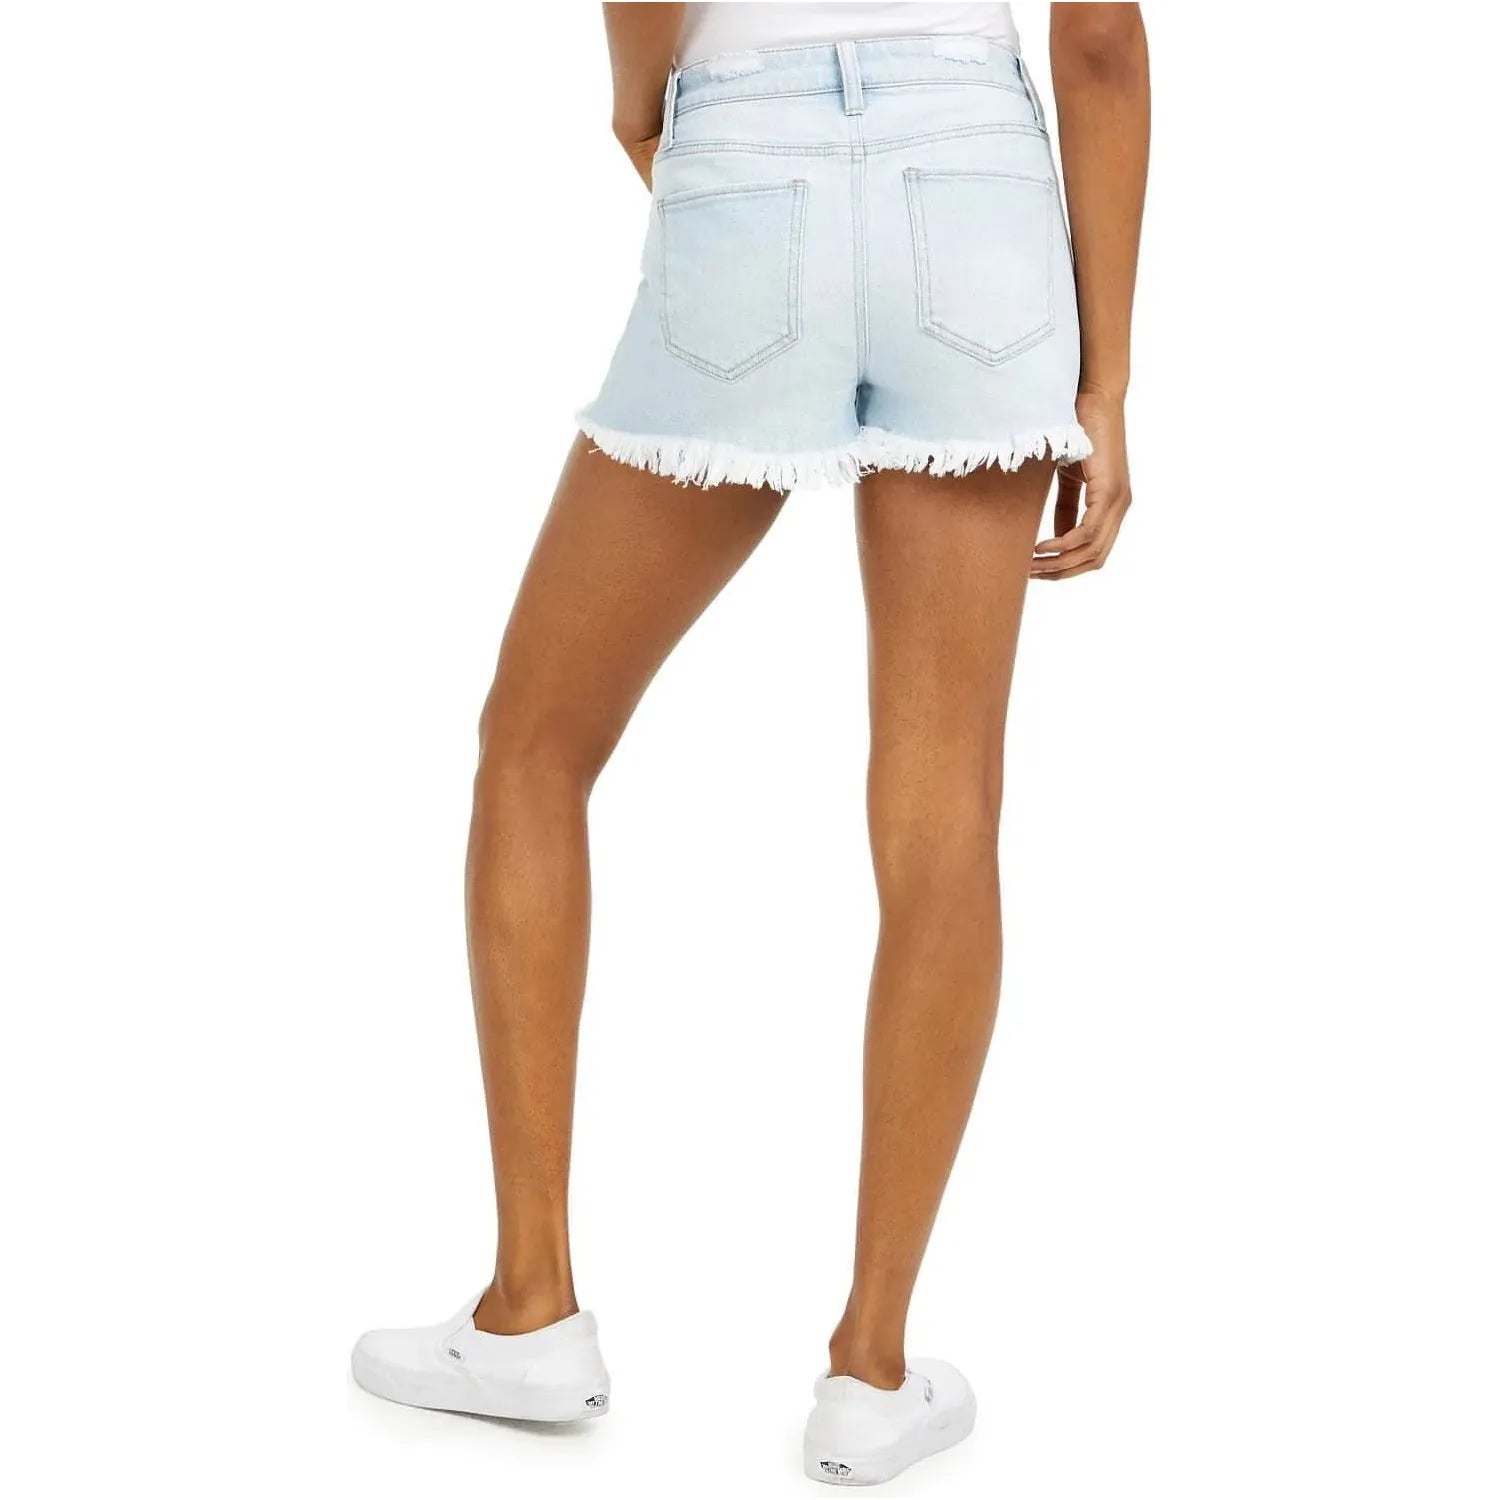 Tinseltown Juniors Frayed Denim Shorts, Blue, Size: 9 - Brandat Outlet